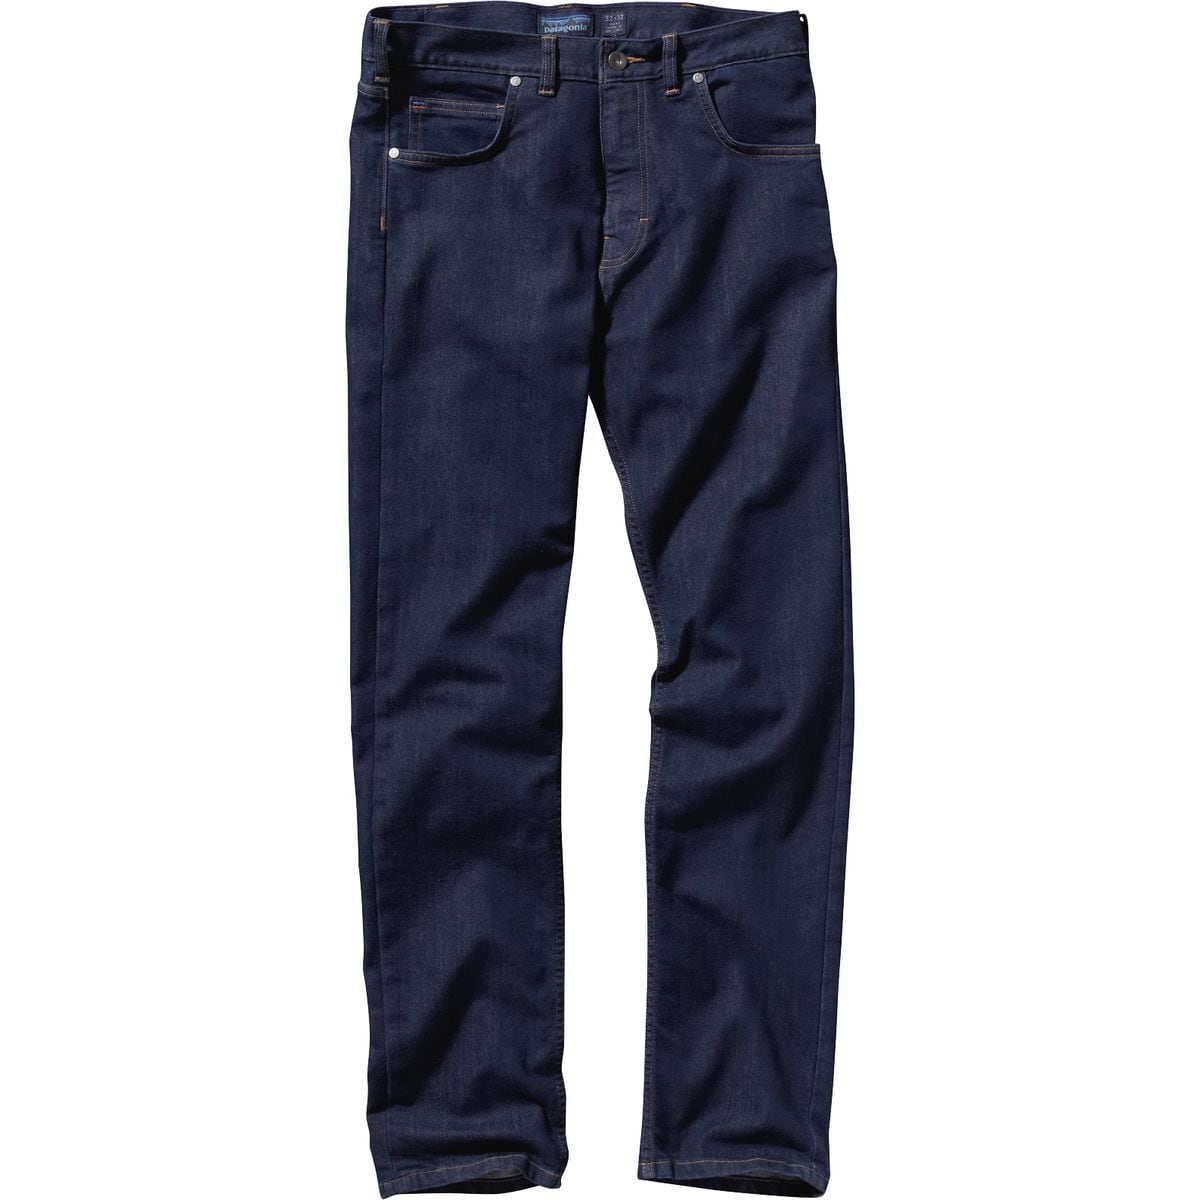 patagonia blue jeans